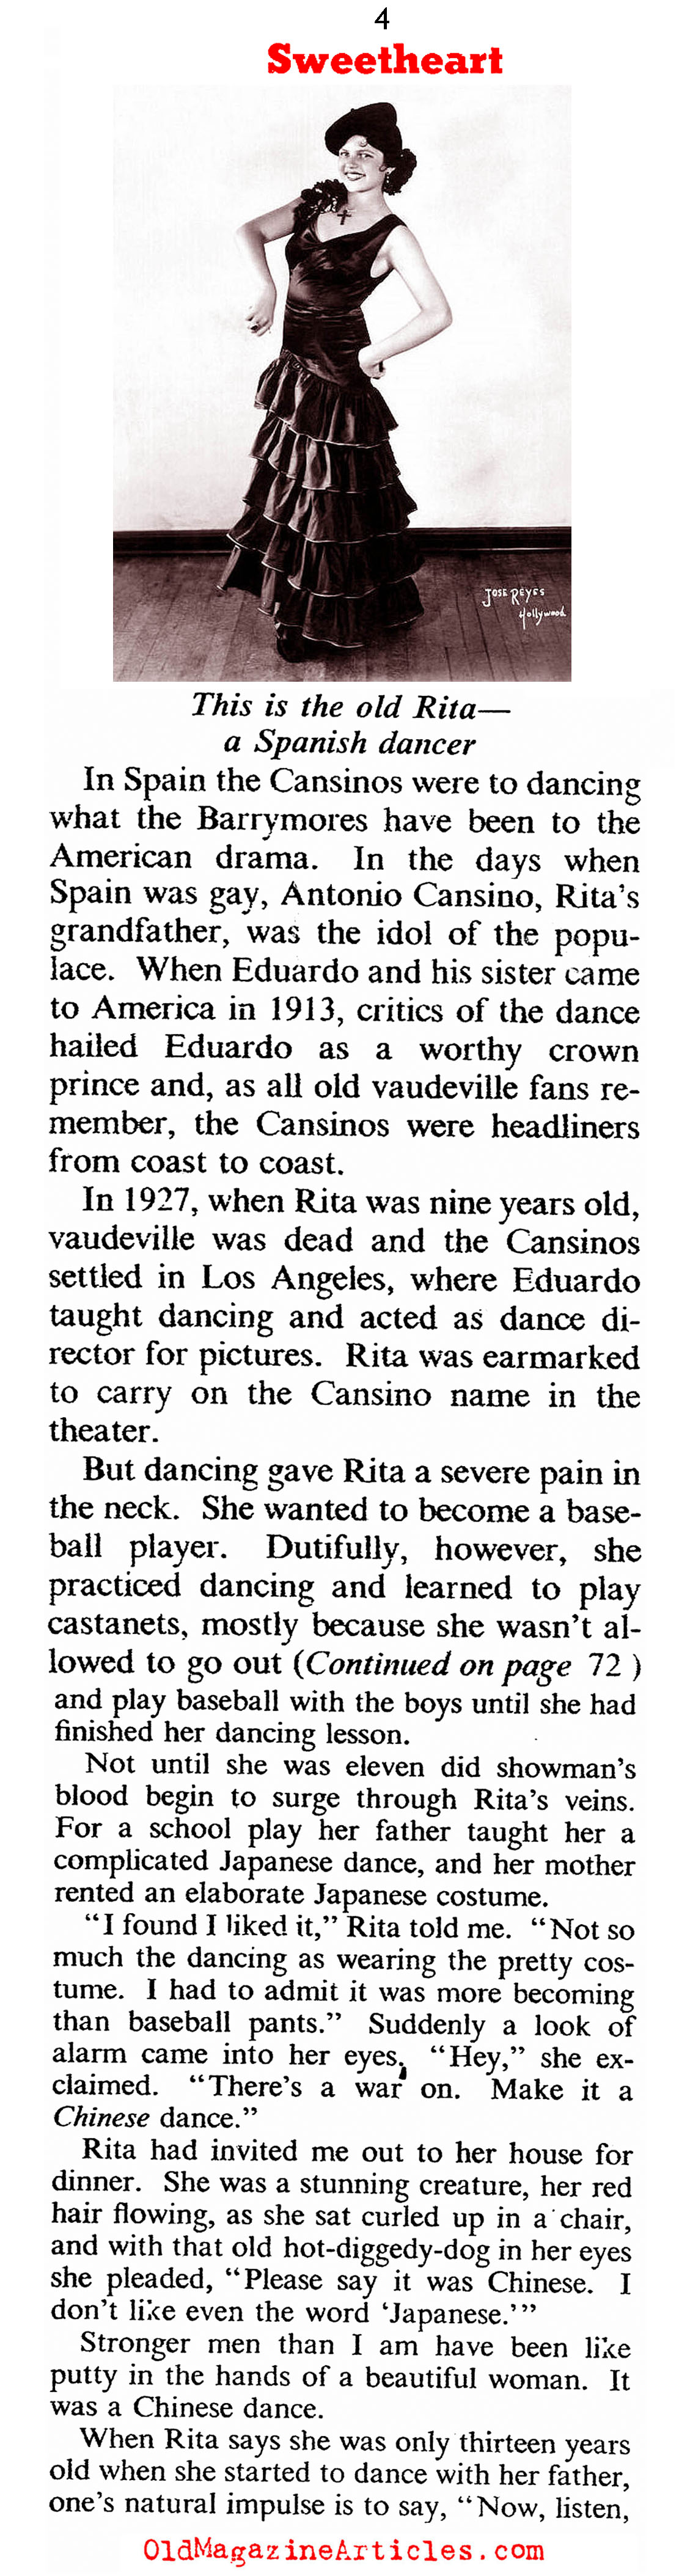 Rita Hayworth (Rob Wagner's Script, 1946, American Magazine, 1942)